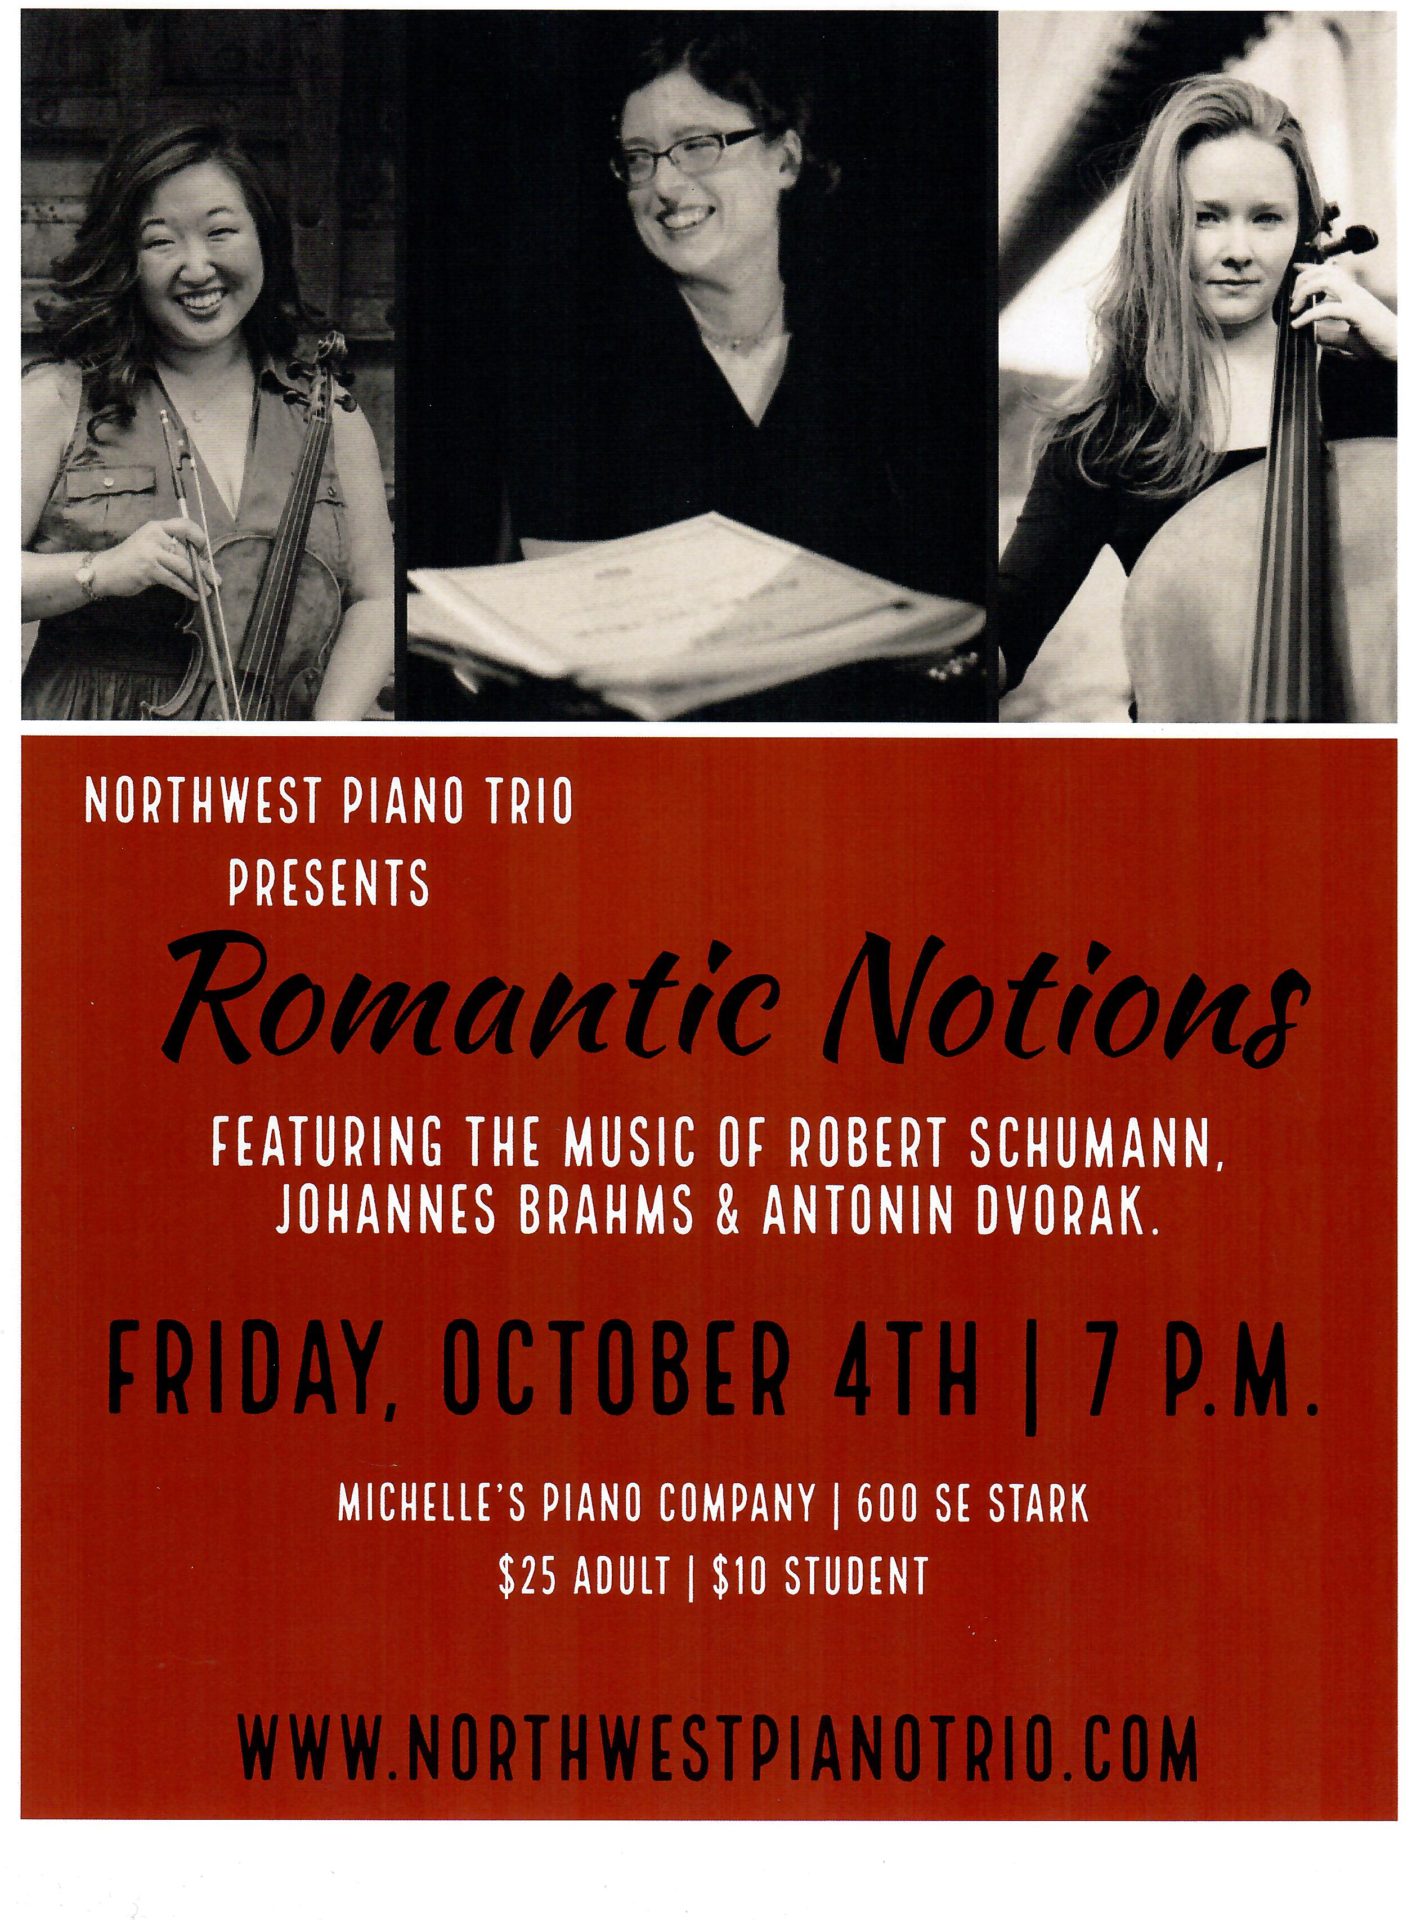 Northwest Piano Trio Presents Romantic Notions